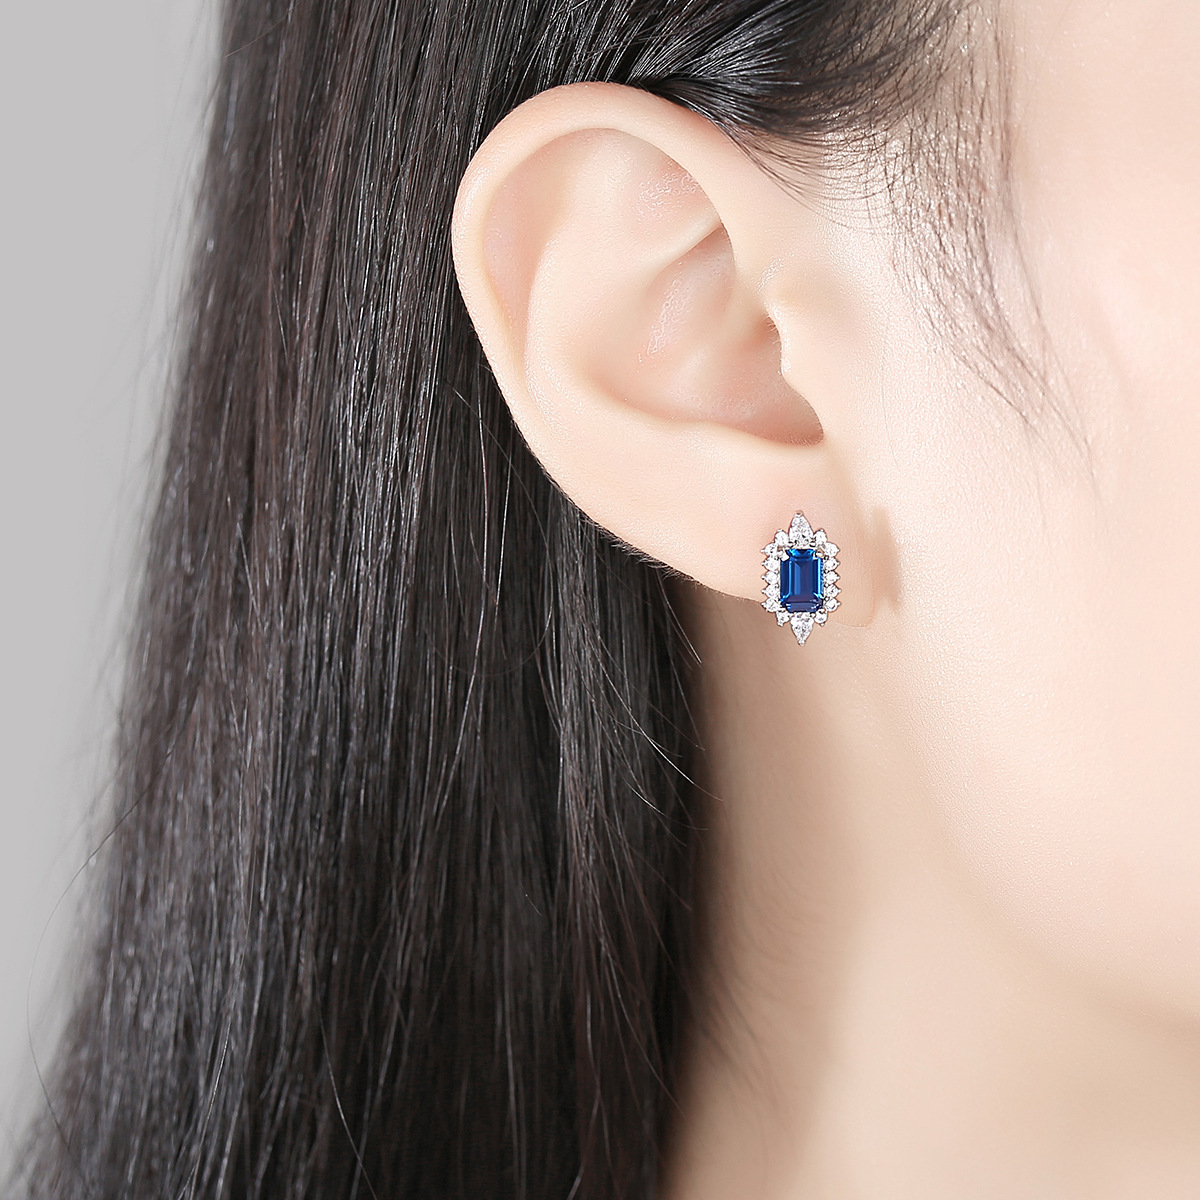 Oval Flower Dark Blue Gemstone Handmade Sterling Silver Earrings